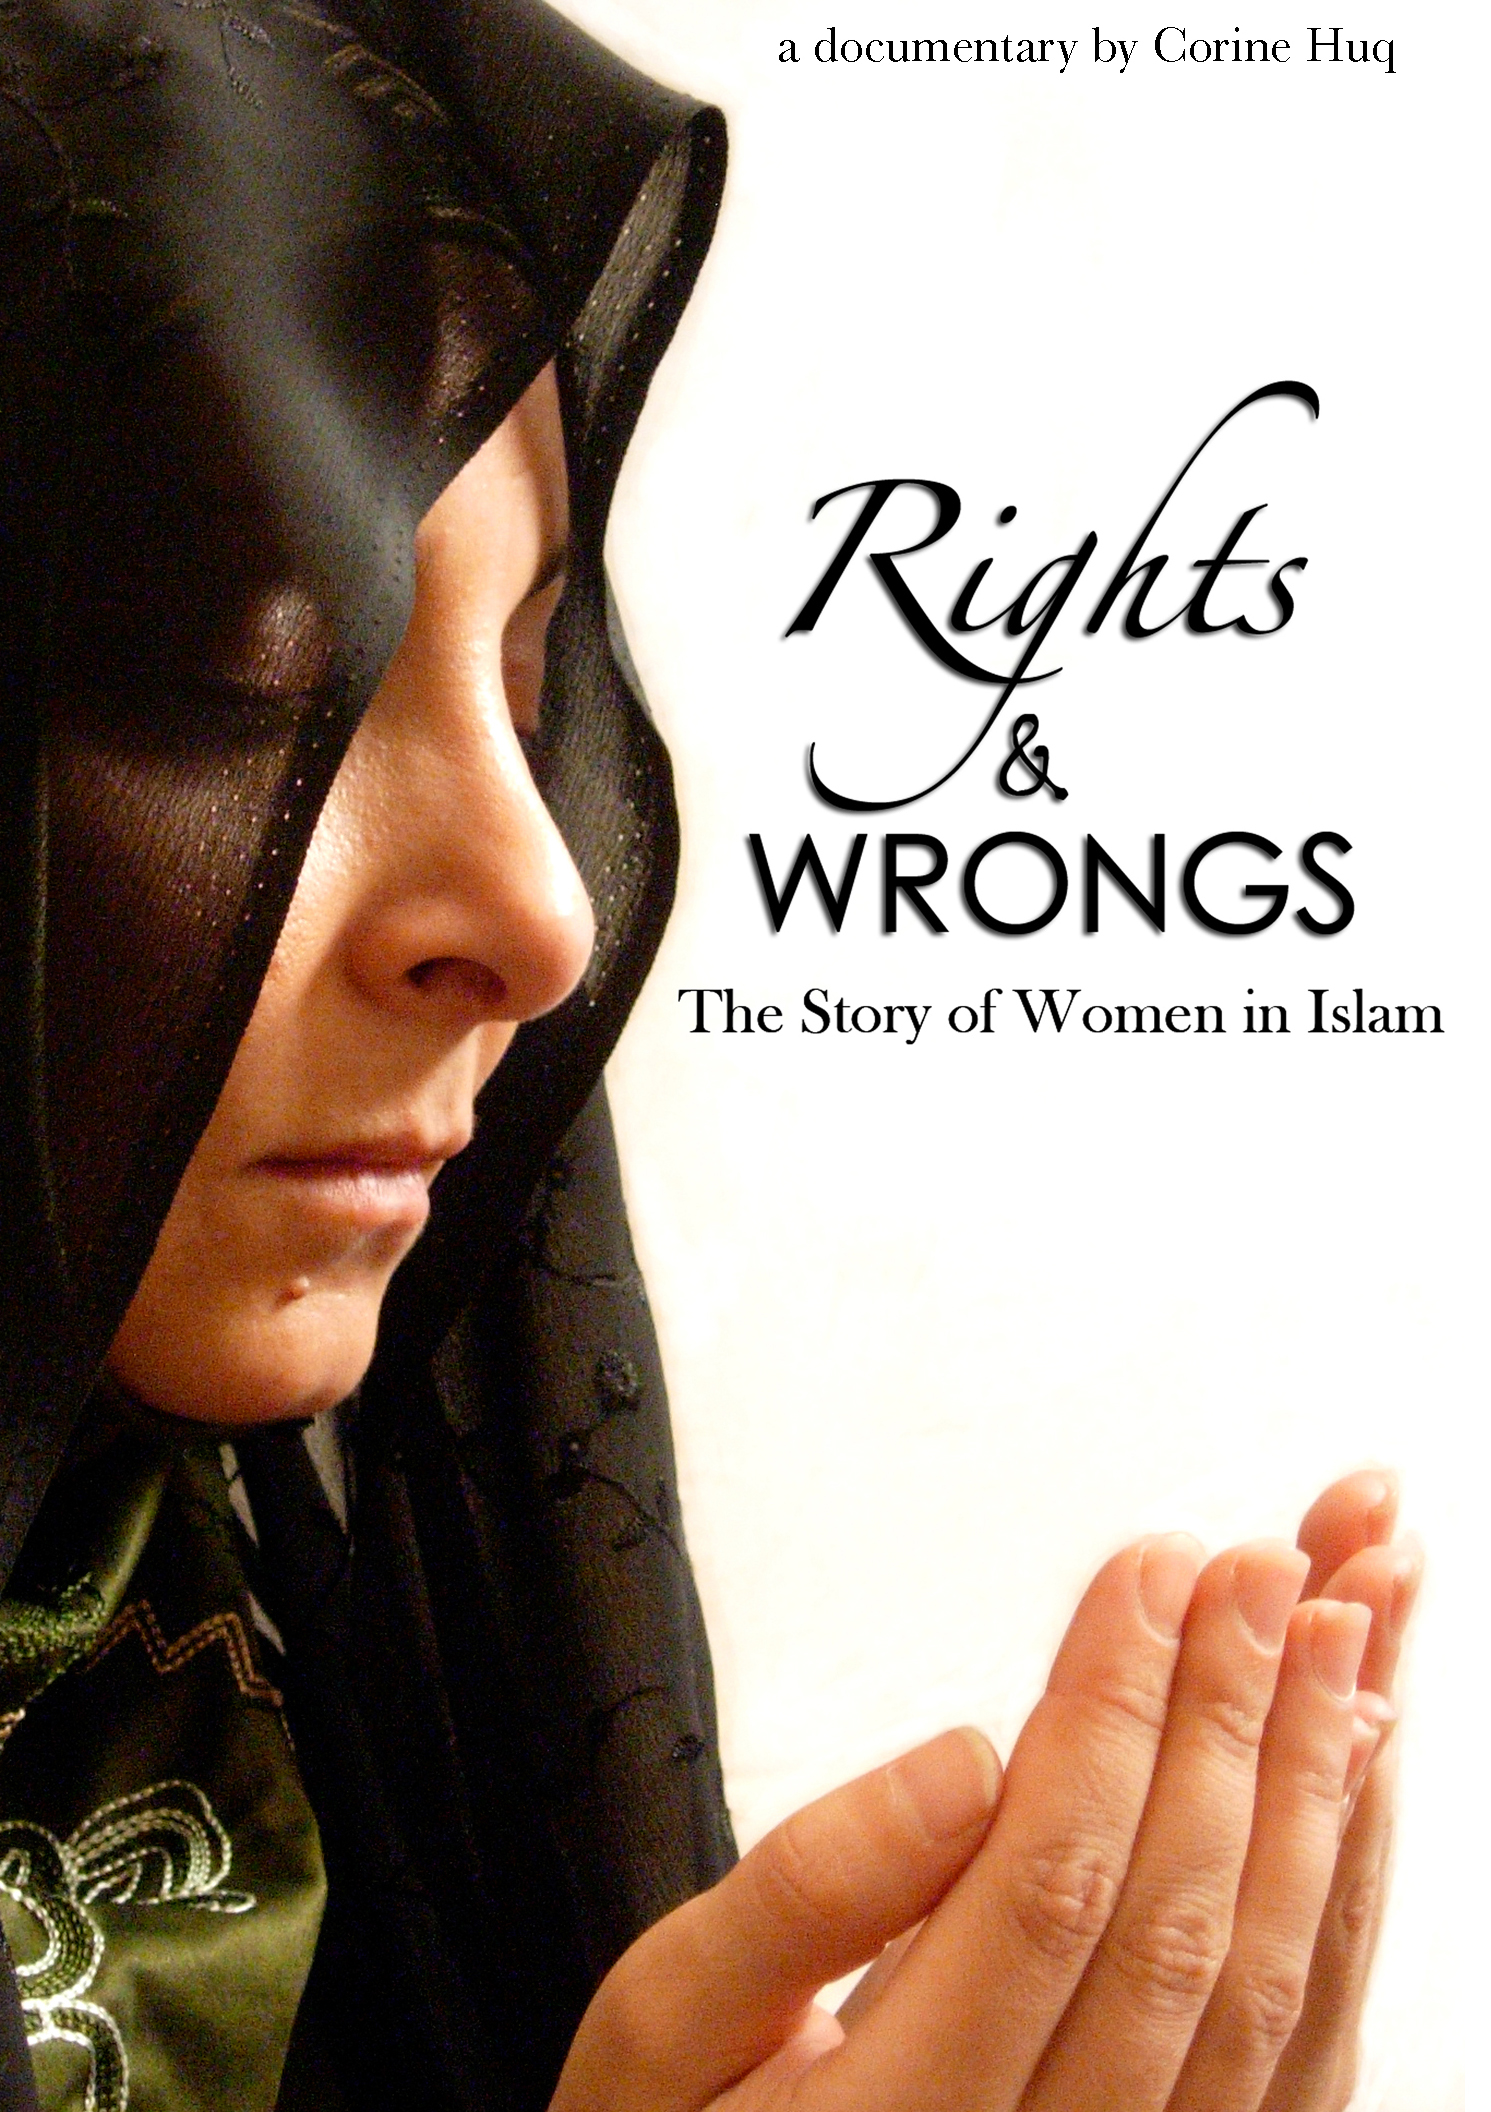 Hijab The Right And Wrong Way